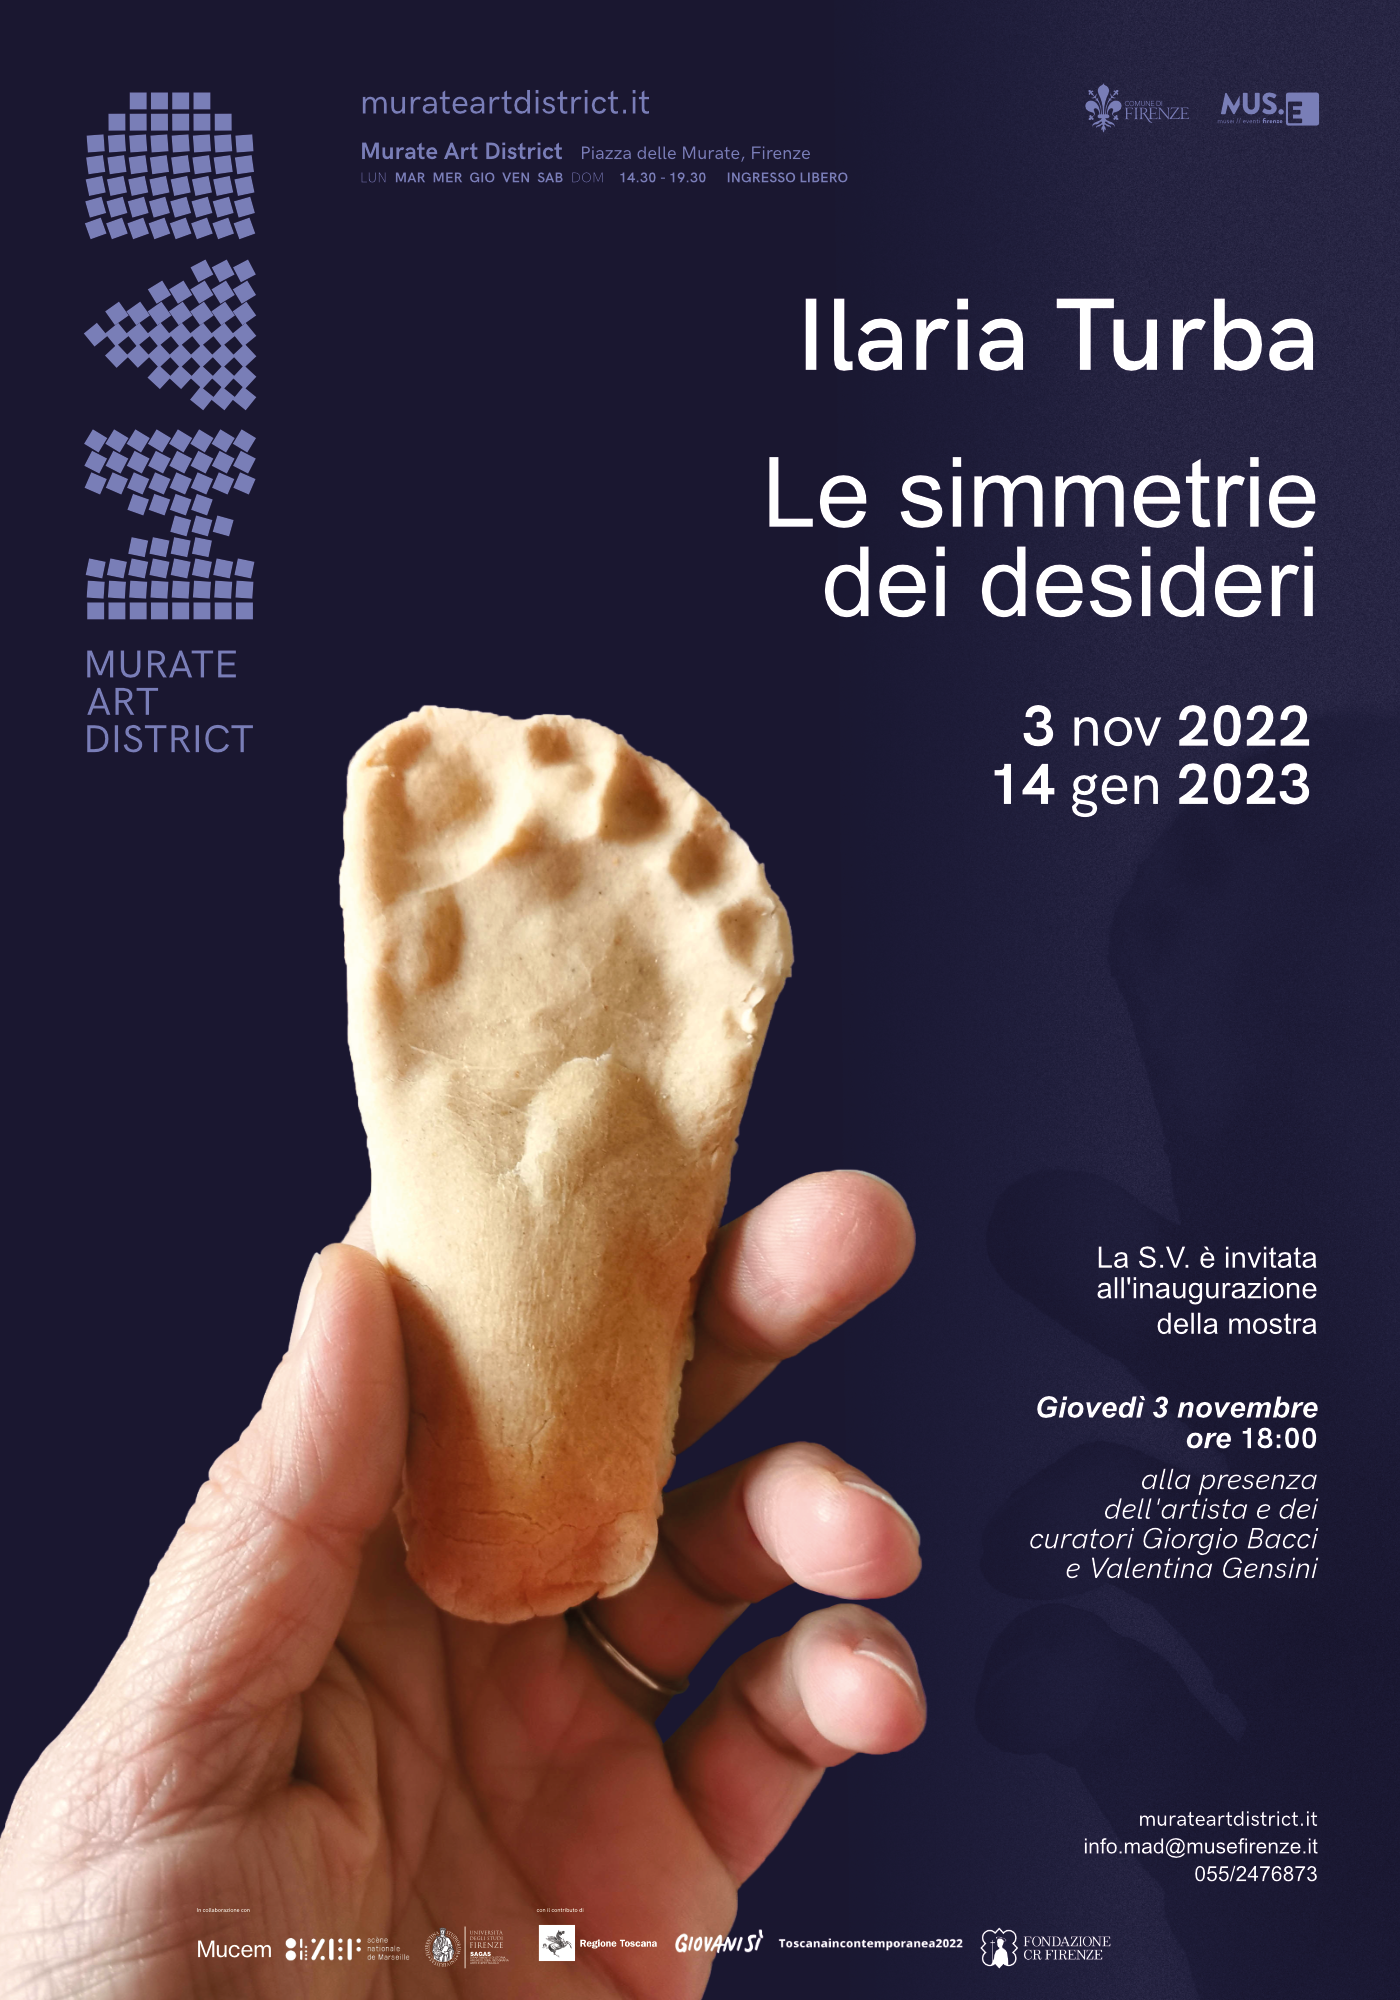 Ilaria Turba – Le simmetrie dei desideri